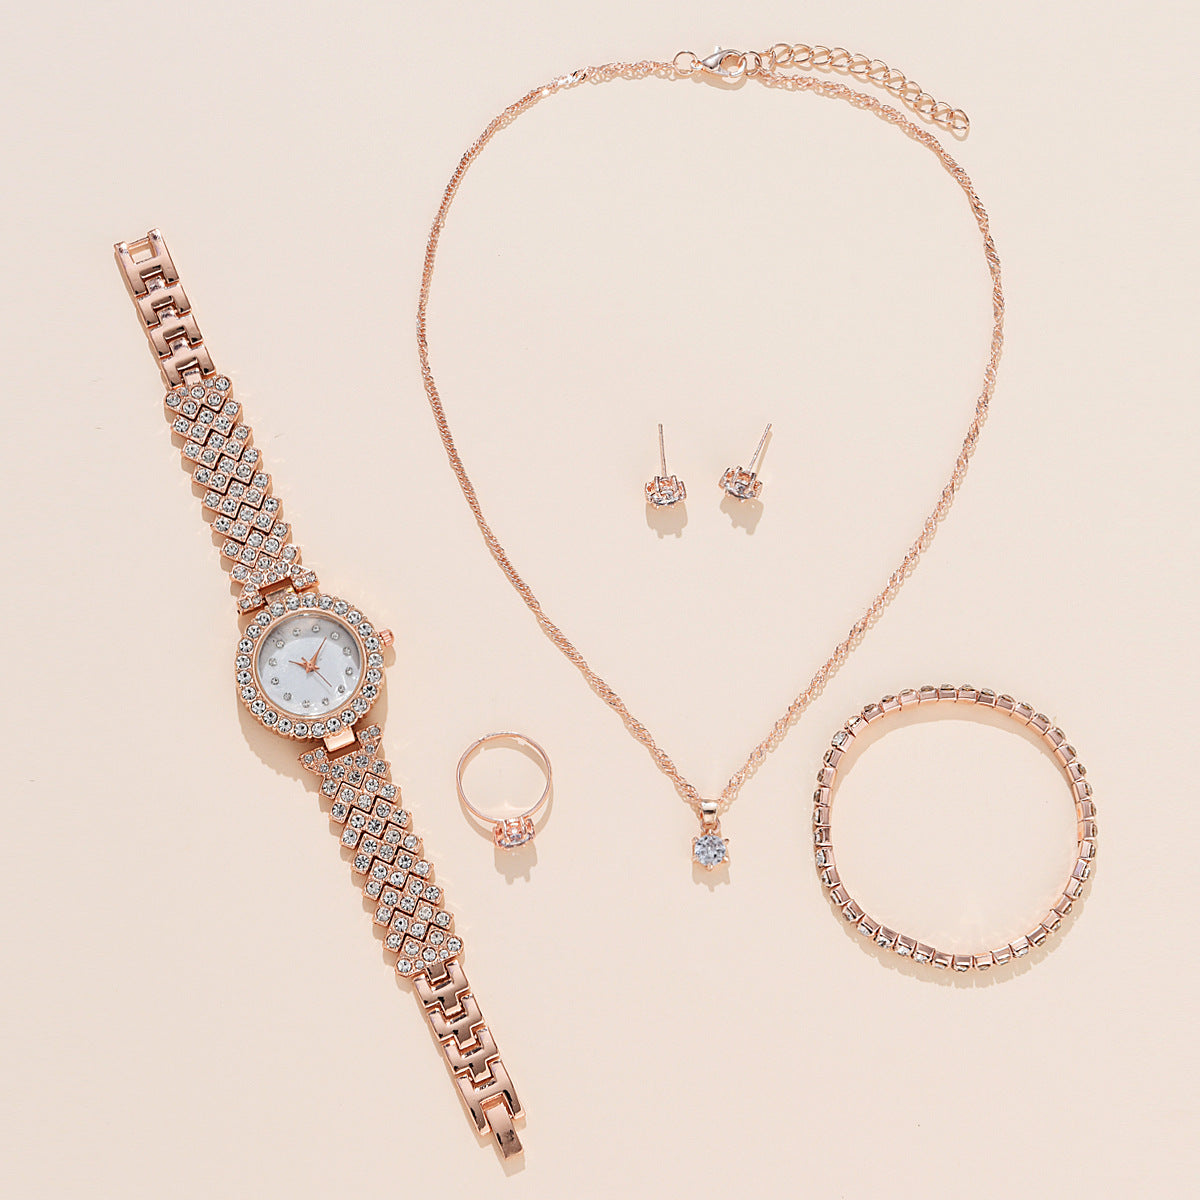 Set of women's alloy quartz watch, necklace, earrings, bracelet and ring